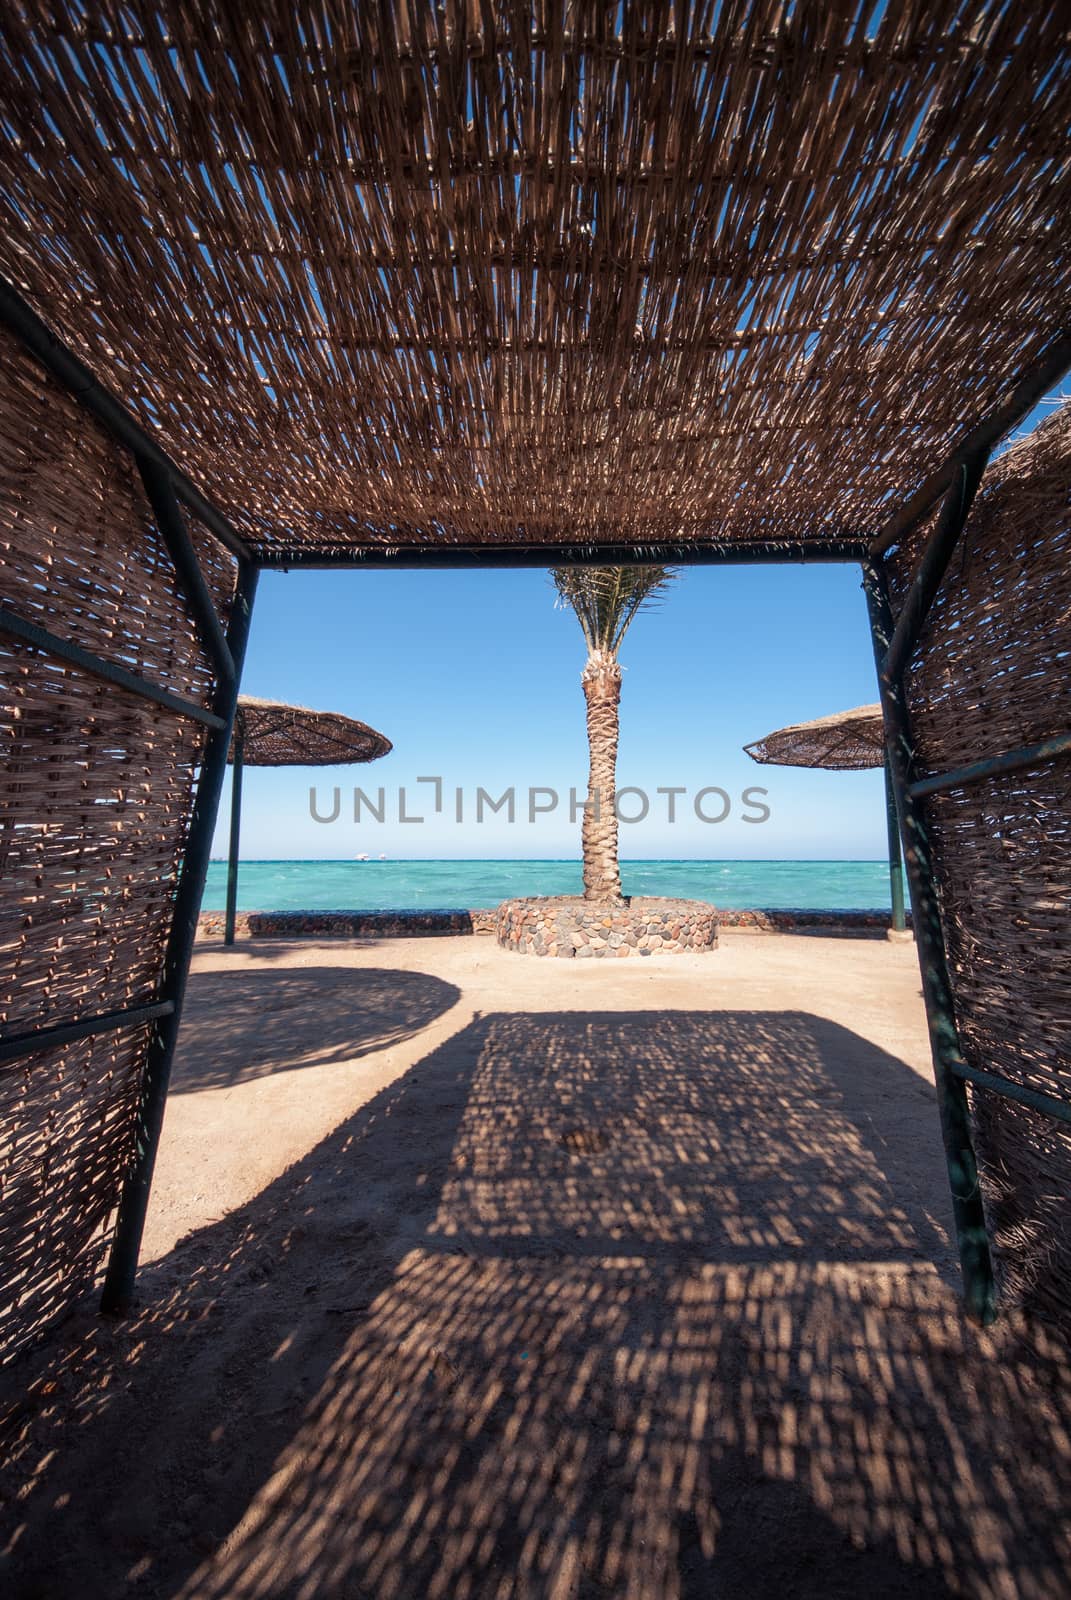 wicker sunshade shelter hovel on the beach in ocean sea resort. Vacation summer time.